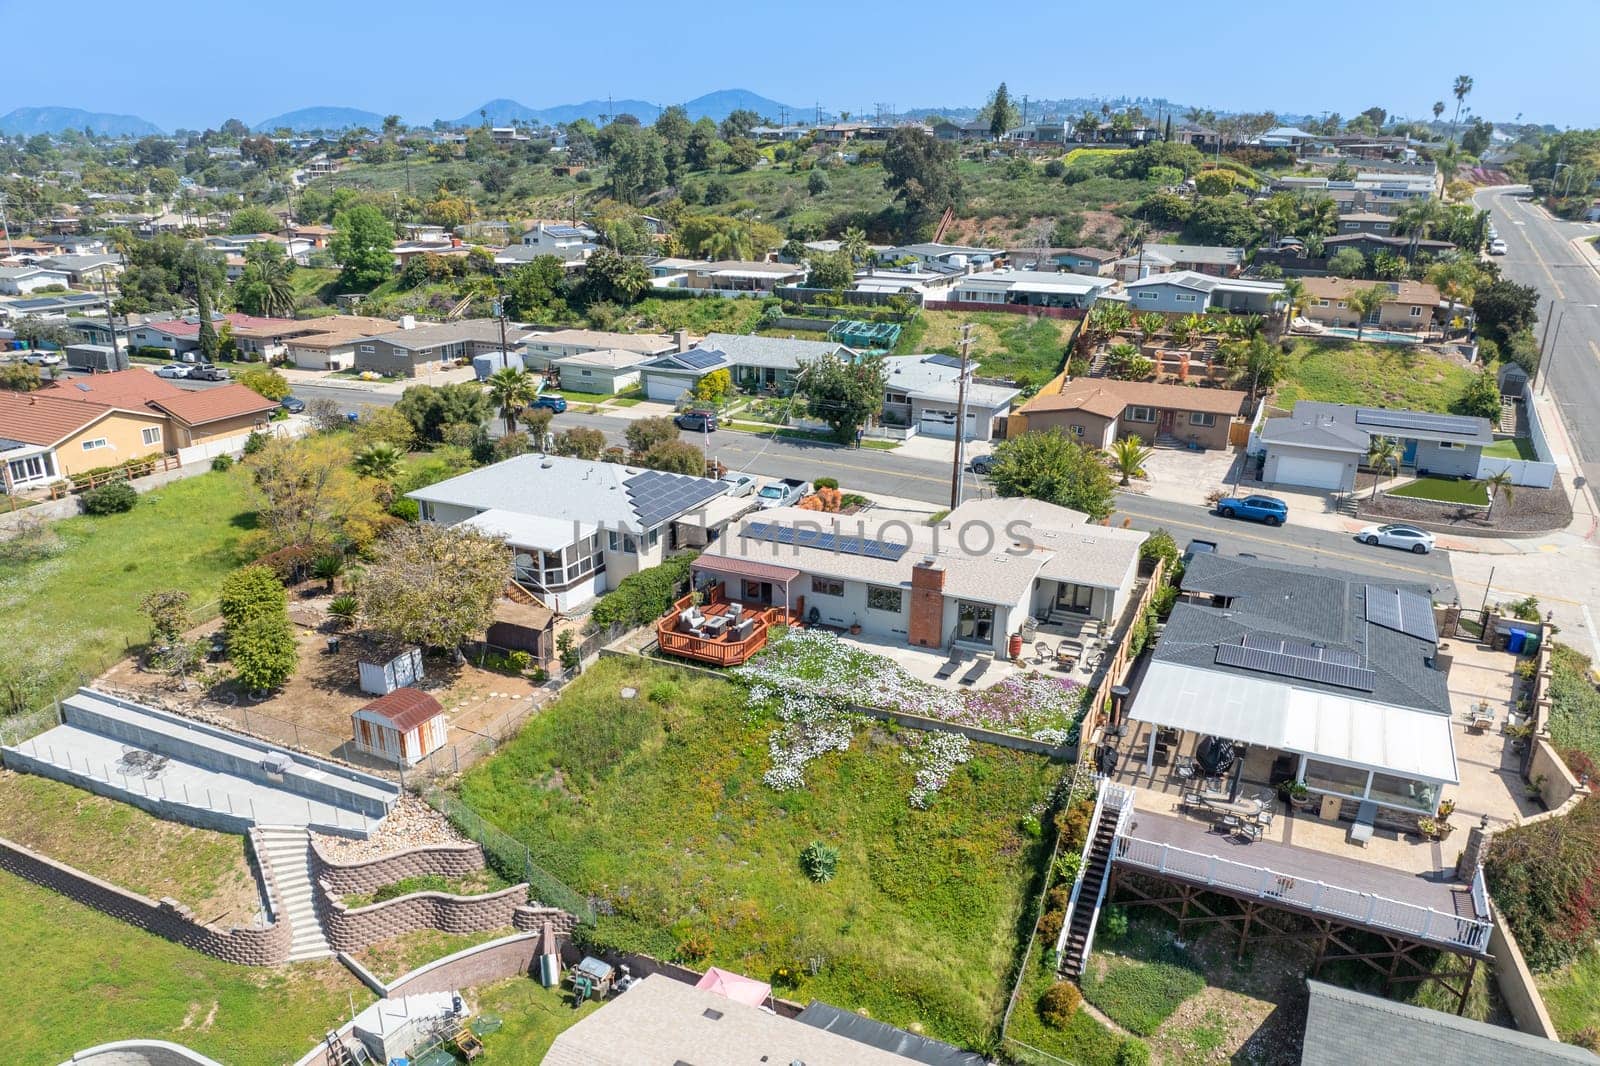 Aerial view of house in San Diego suburb, California, USA by Bonandbon